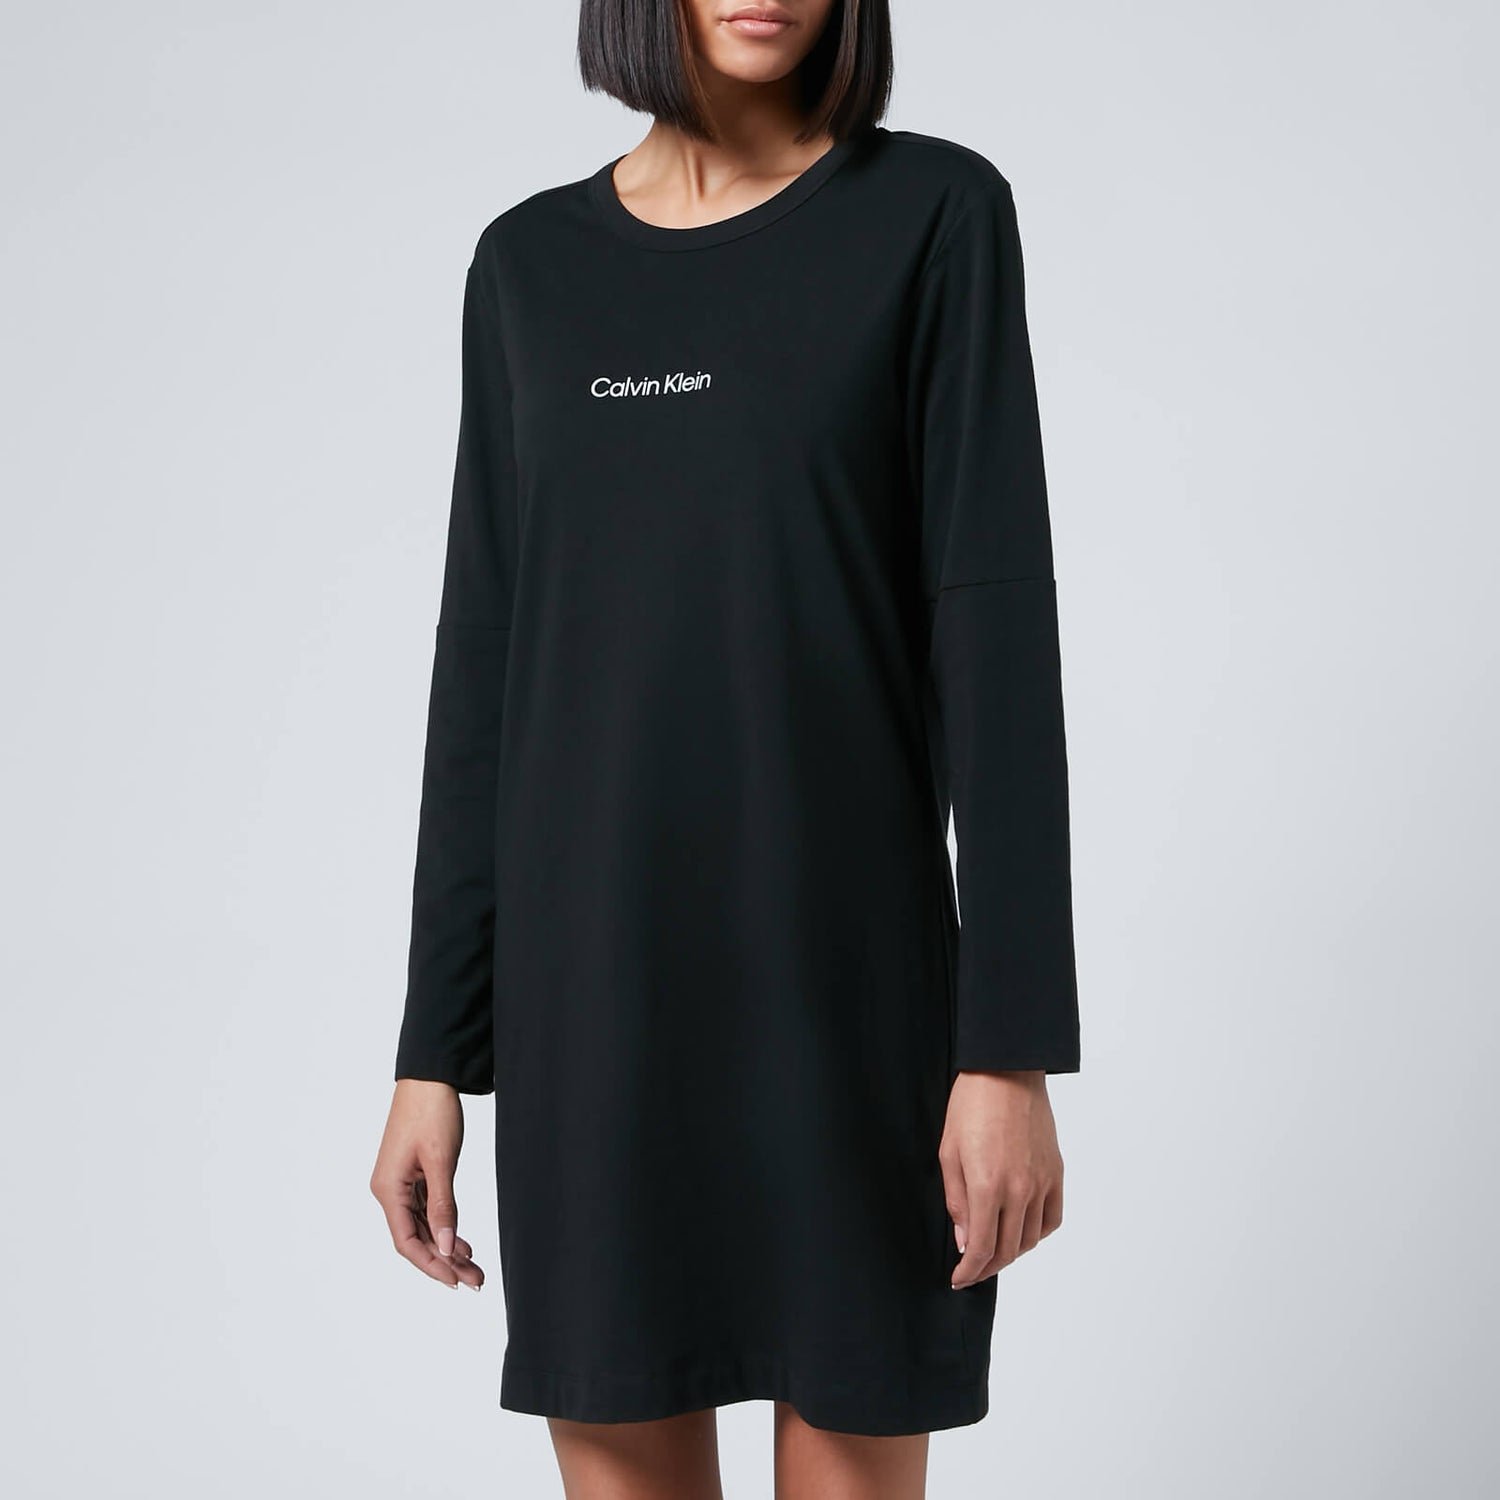 Calvin Klein Women's Long Sleeve Nightshirt - Black - XS